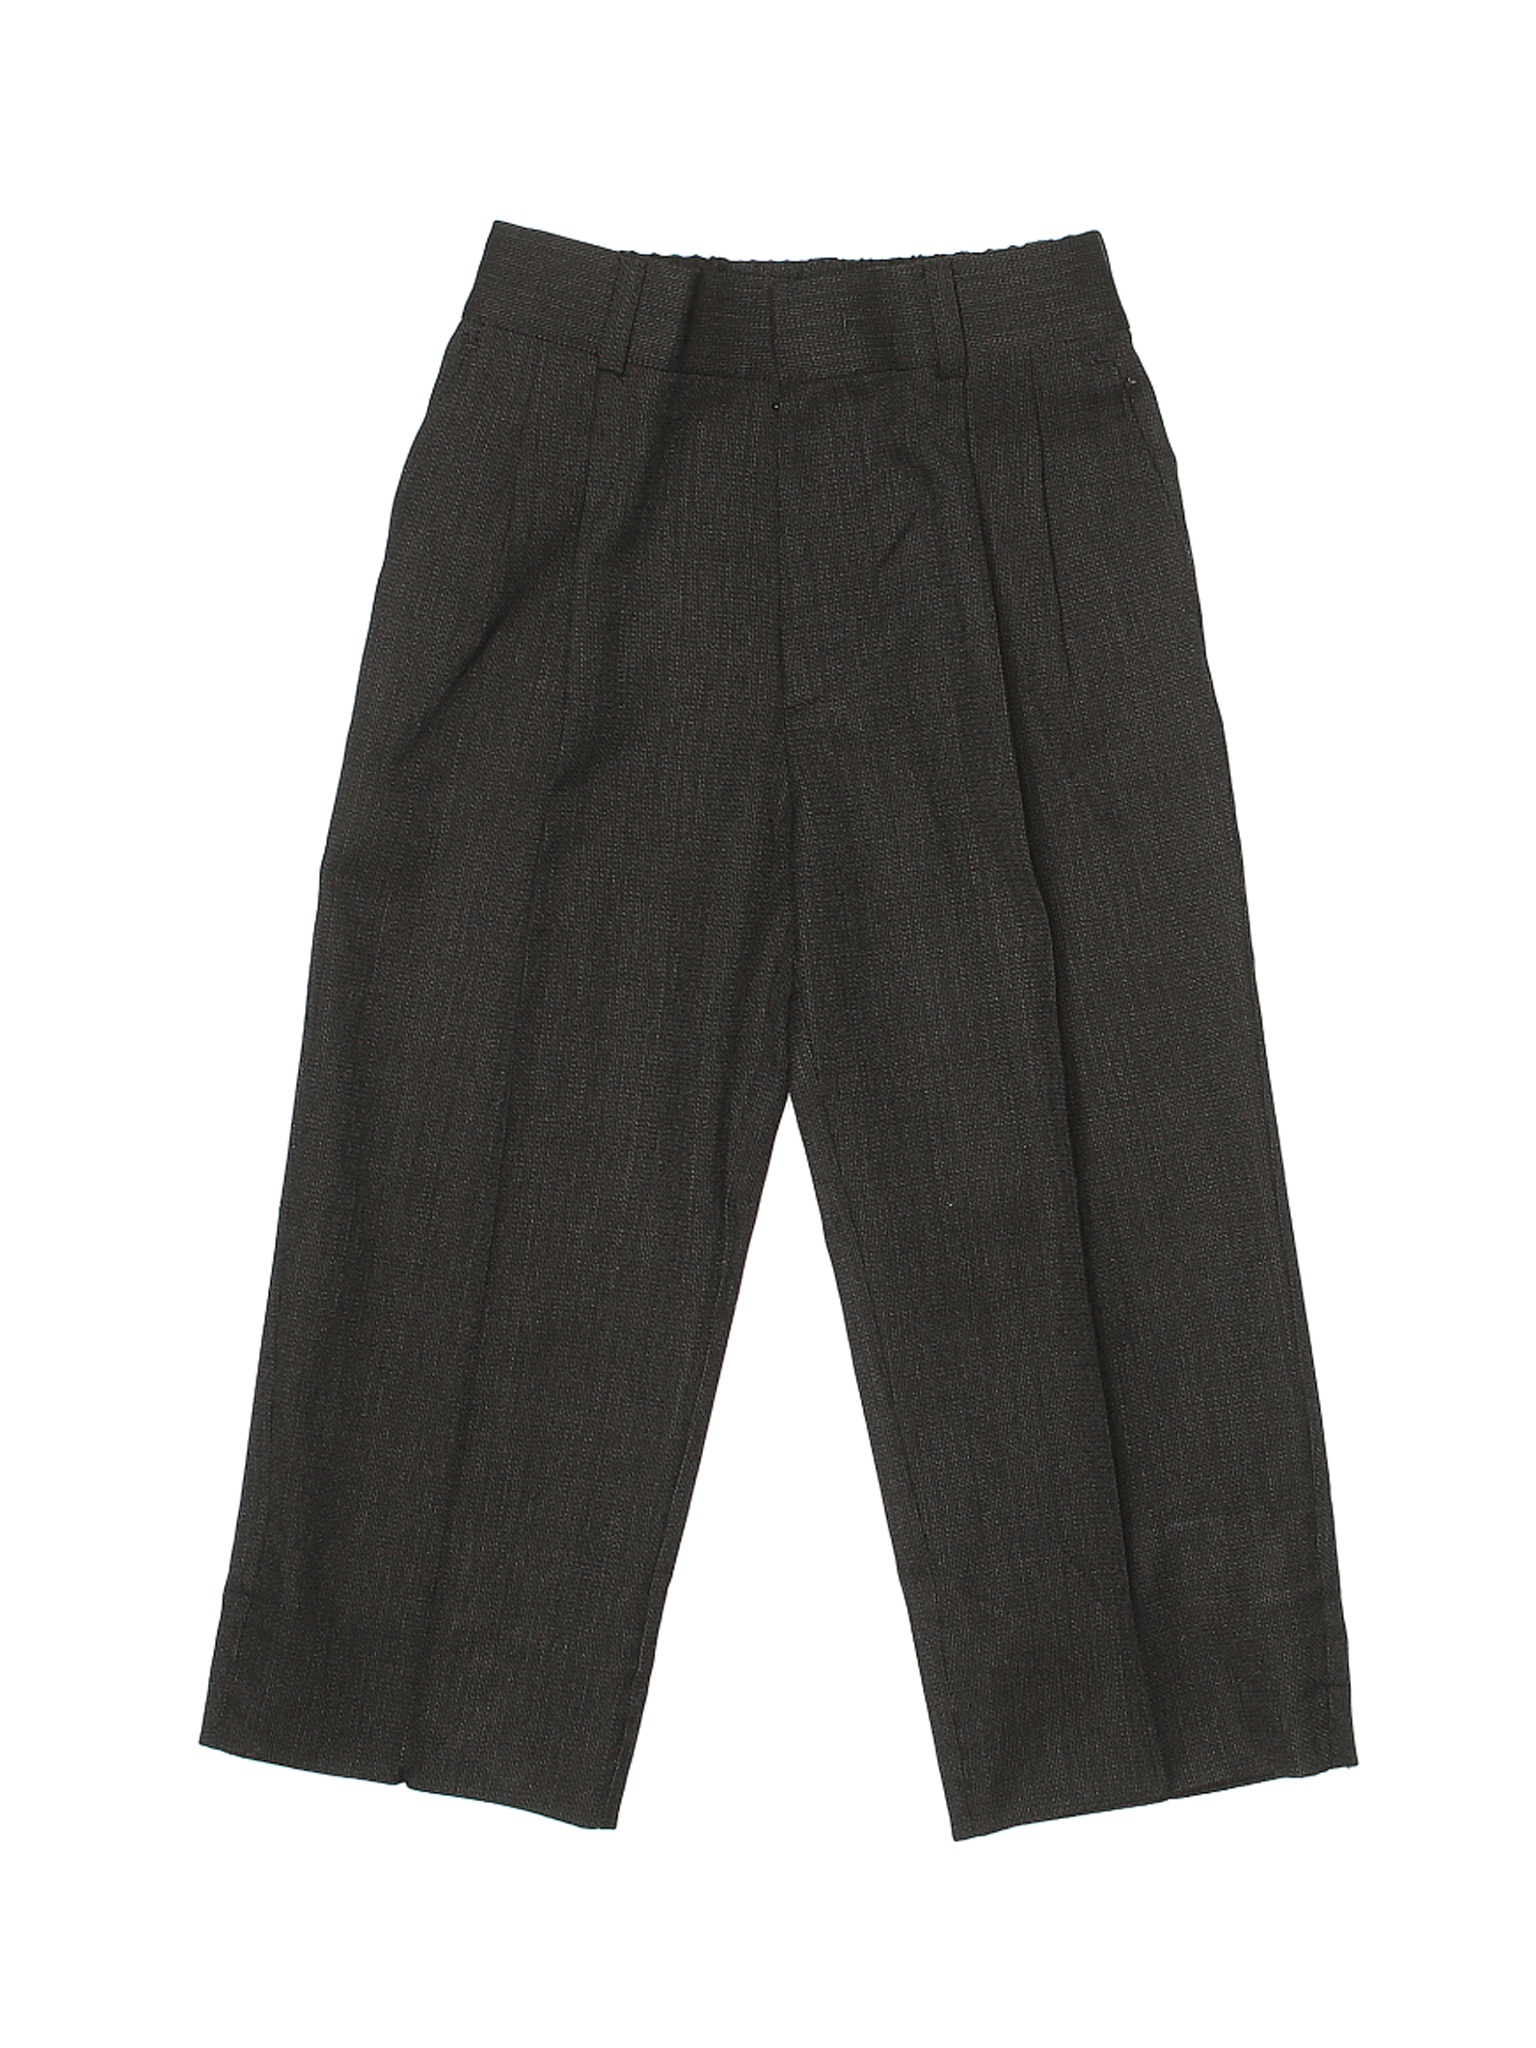 Unbranded Boys Gray Dress Pants 6 | eBay